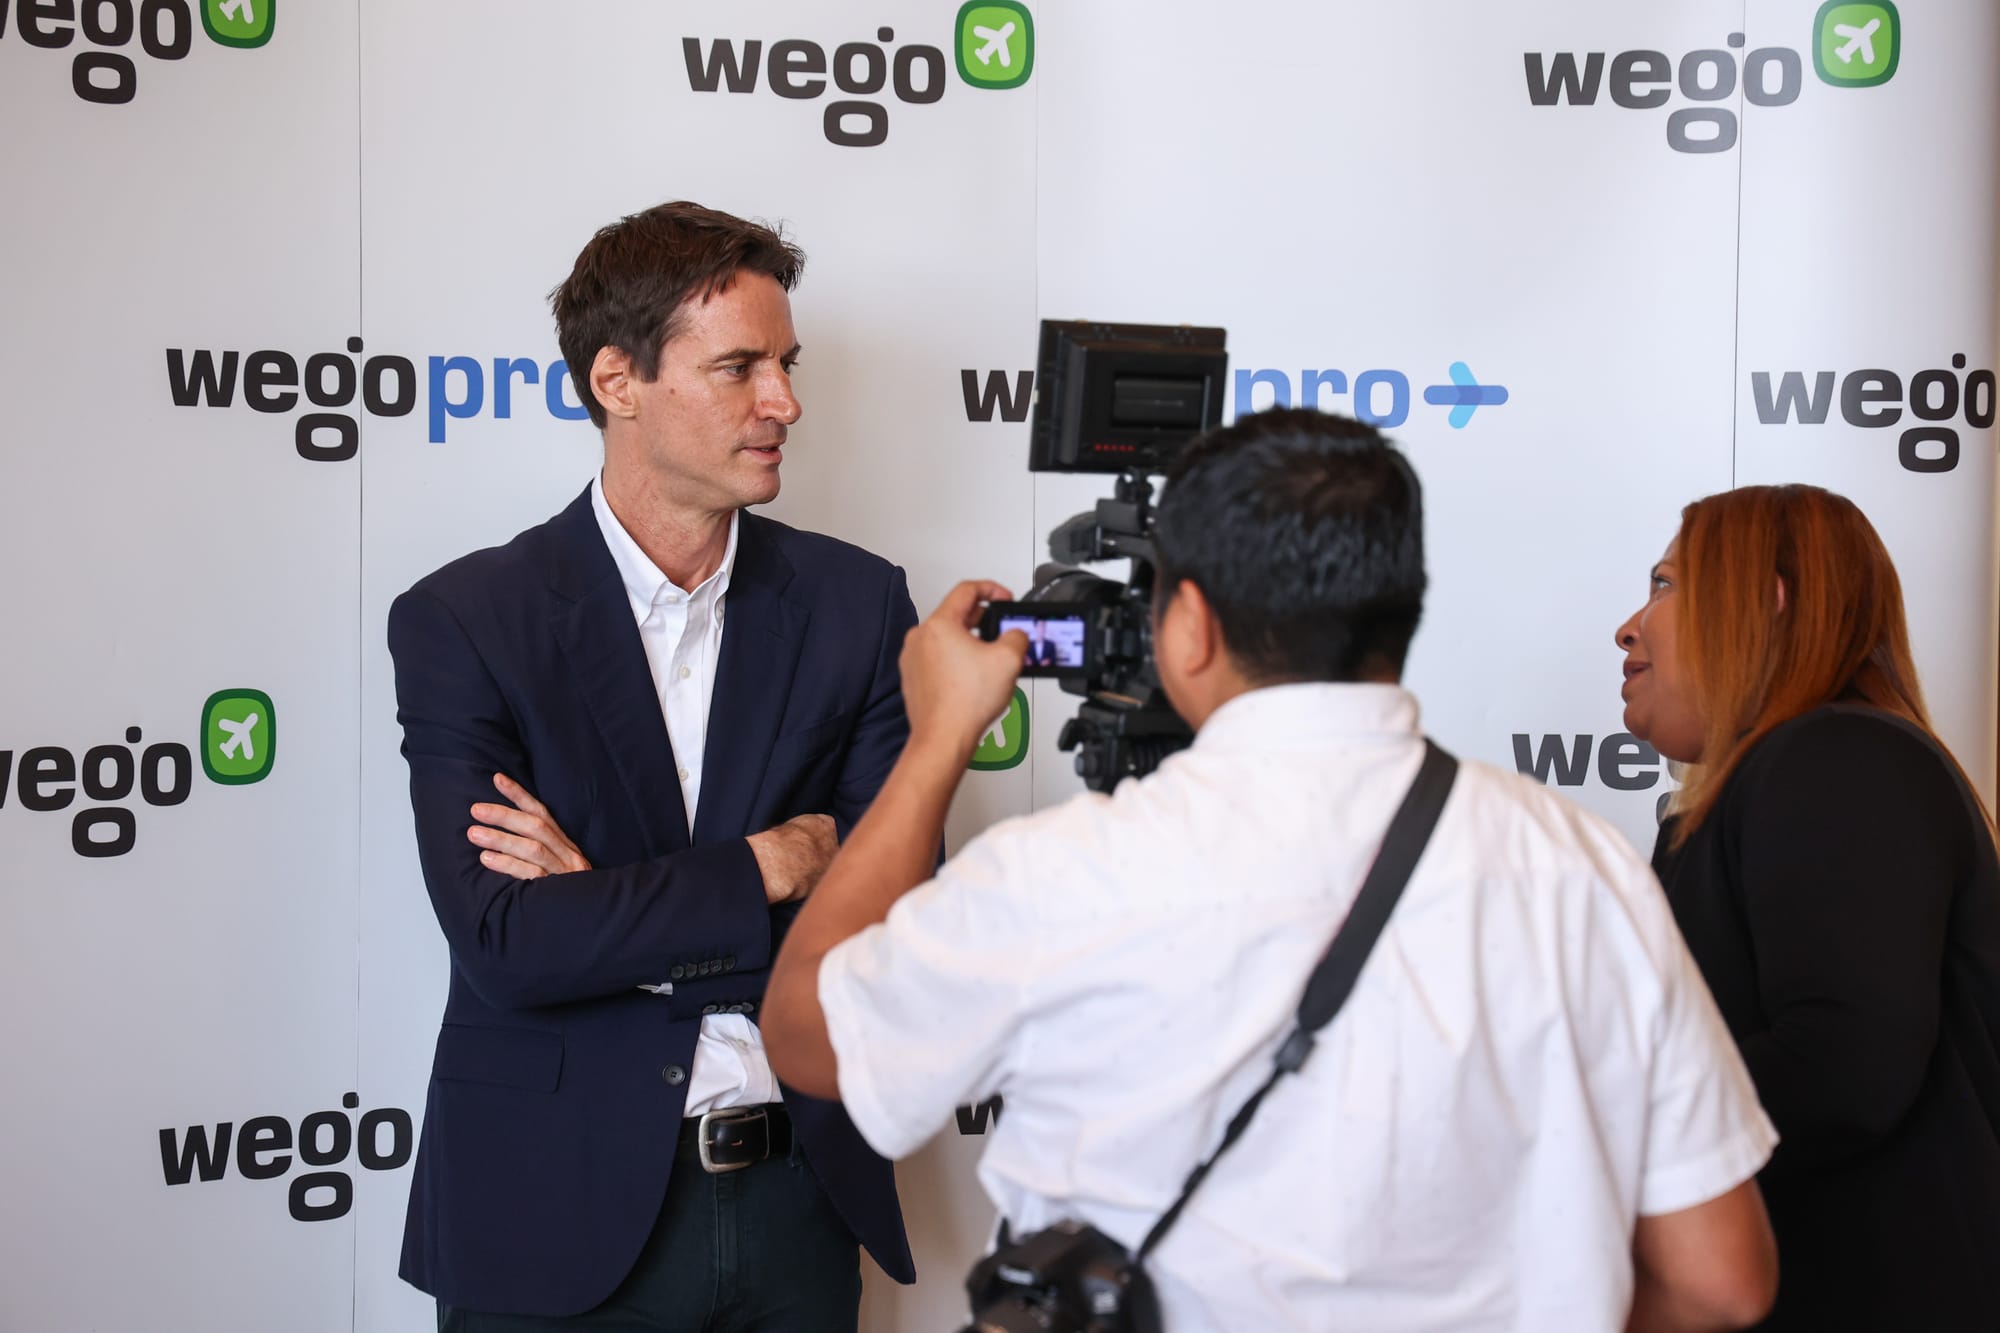 WegoPro Launch Event-1:1 Media Interaction - WegoPro